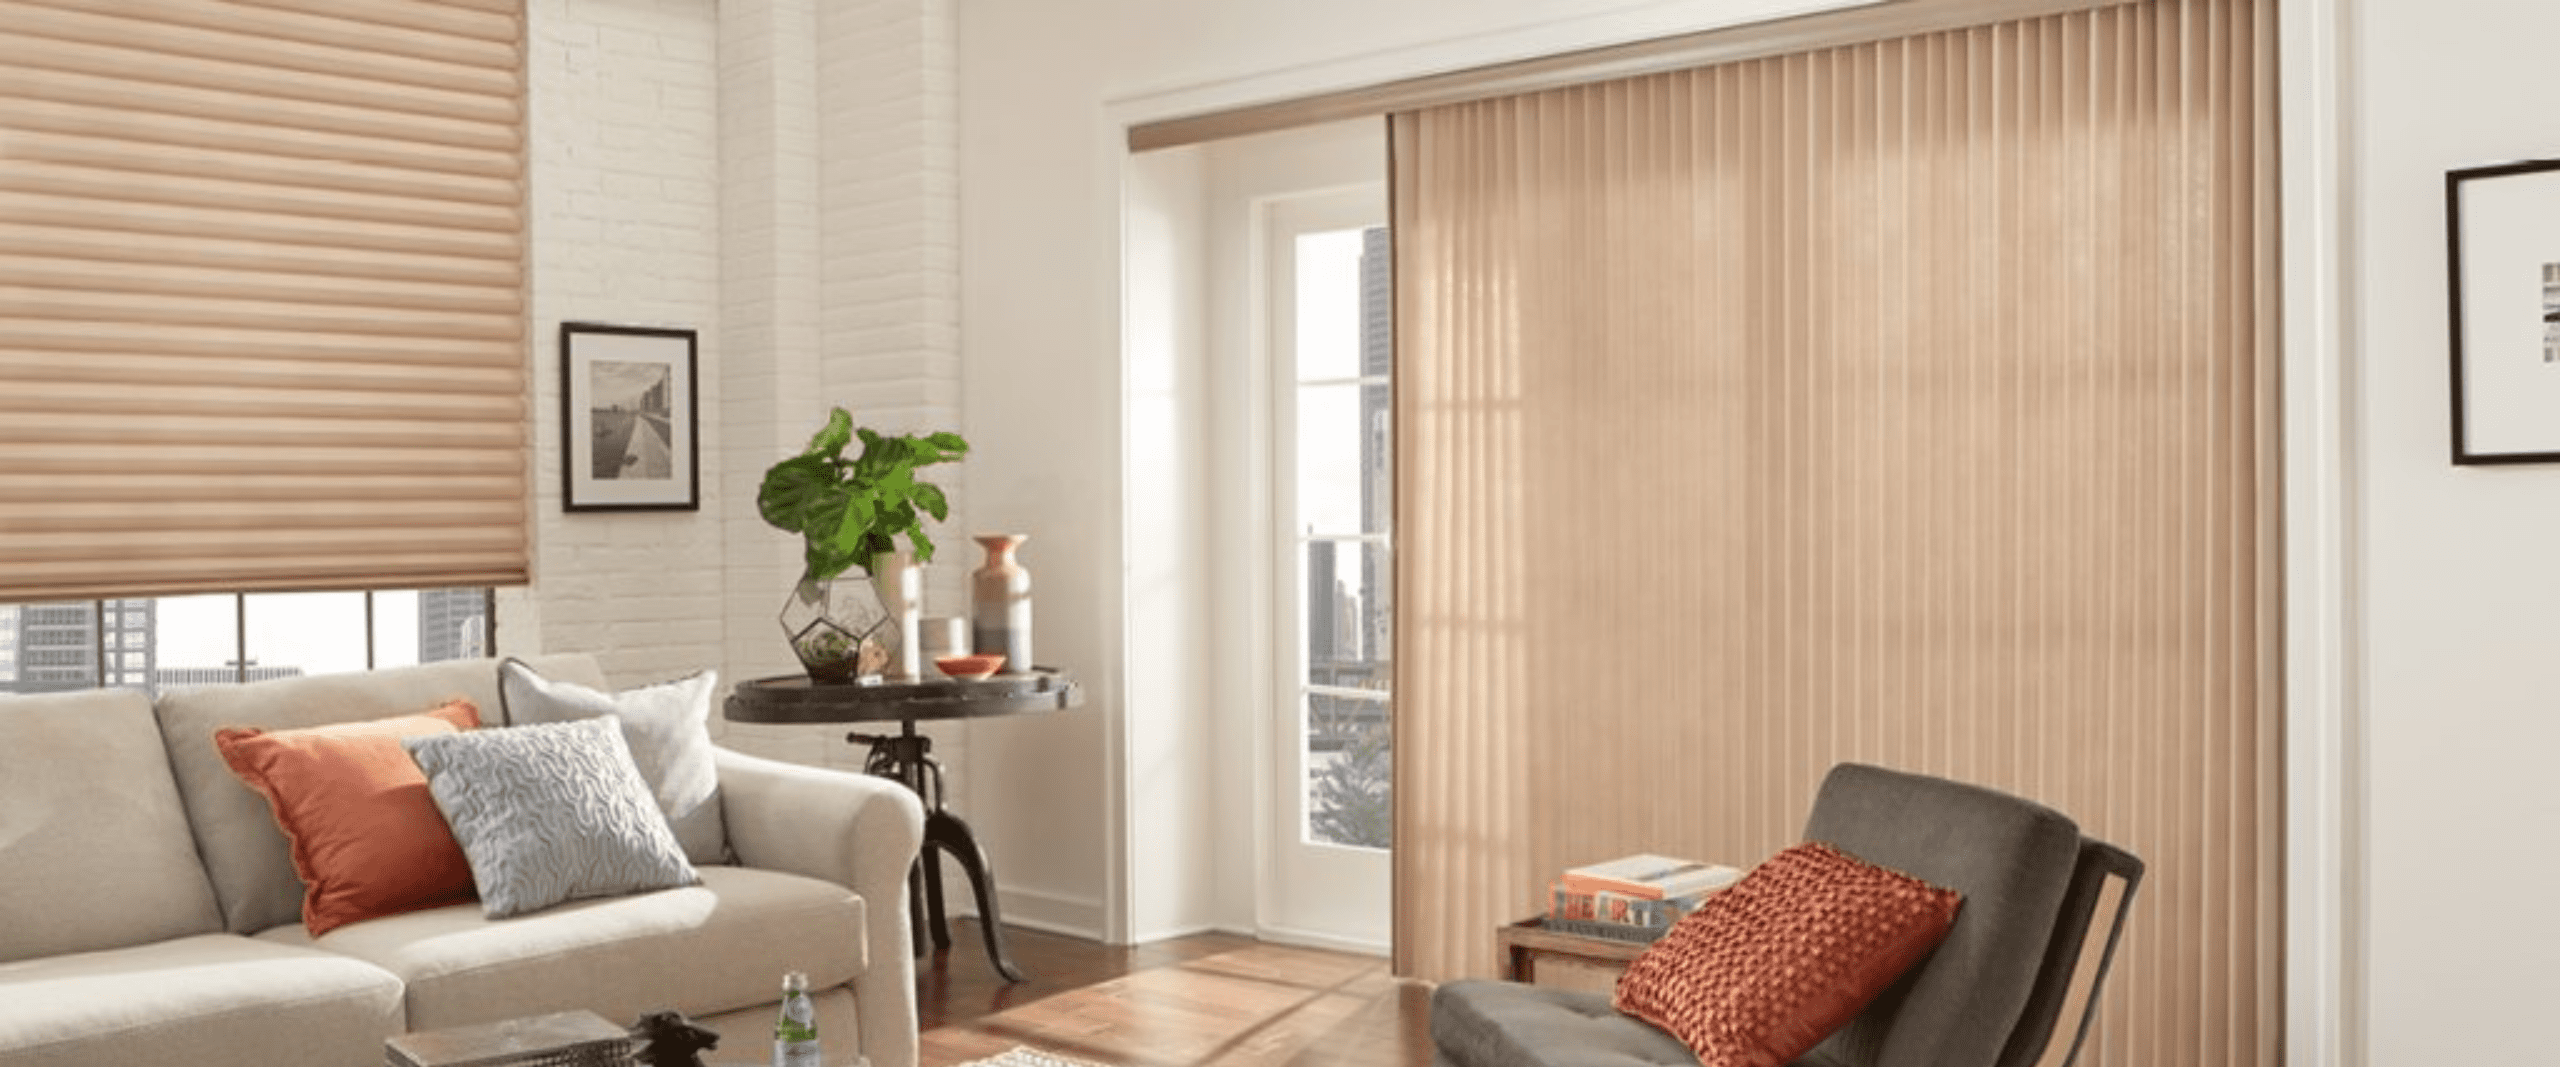 Window treatments for living room doors.